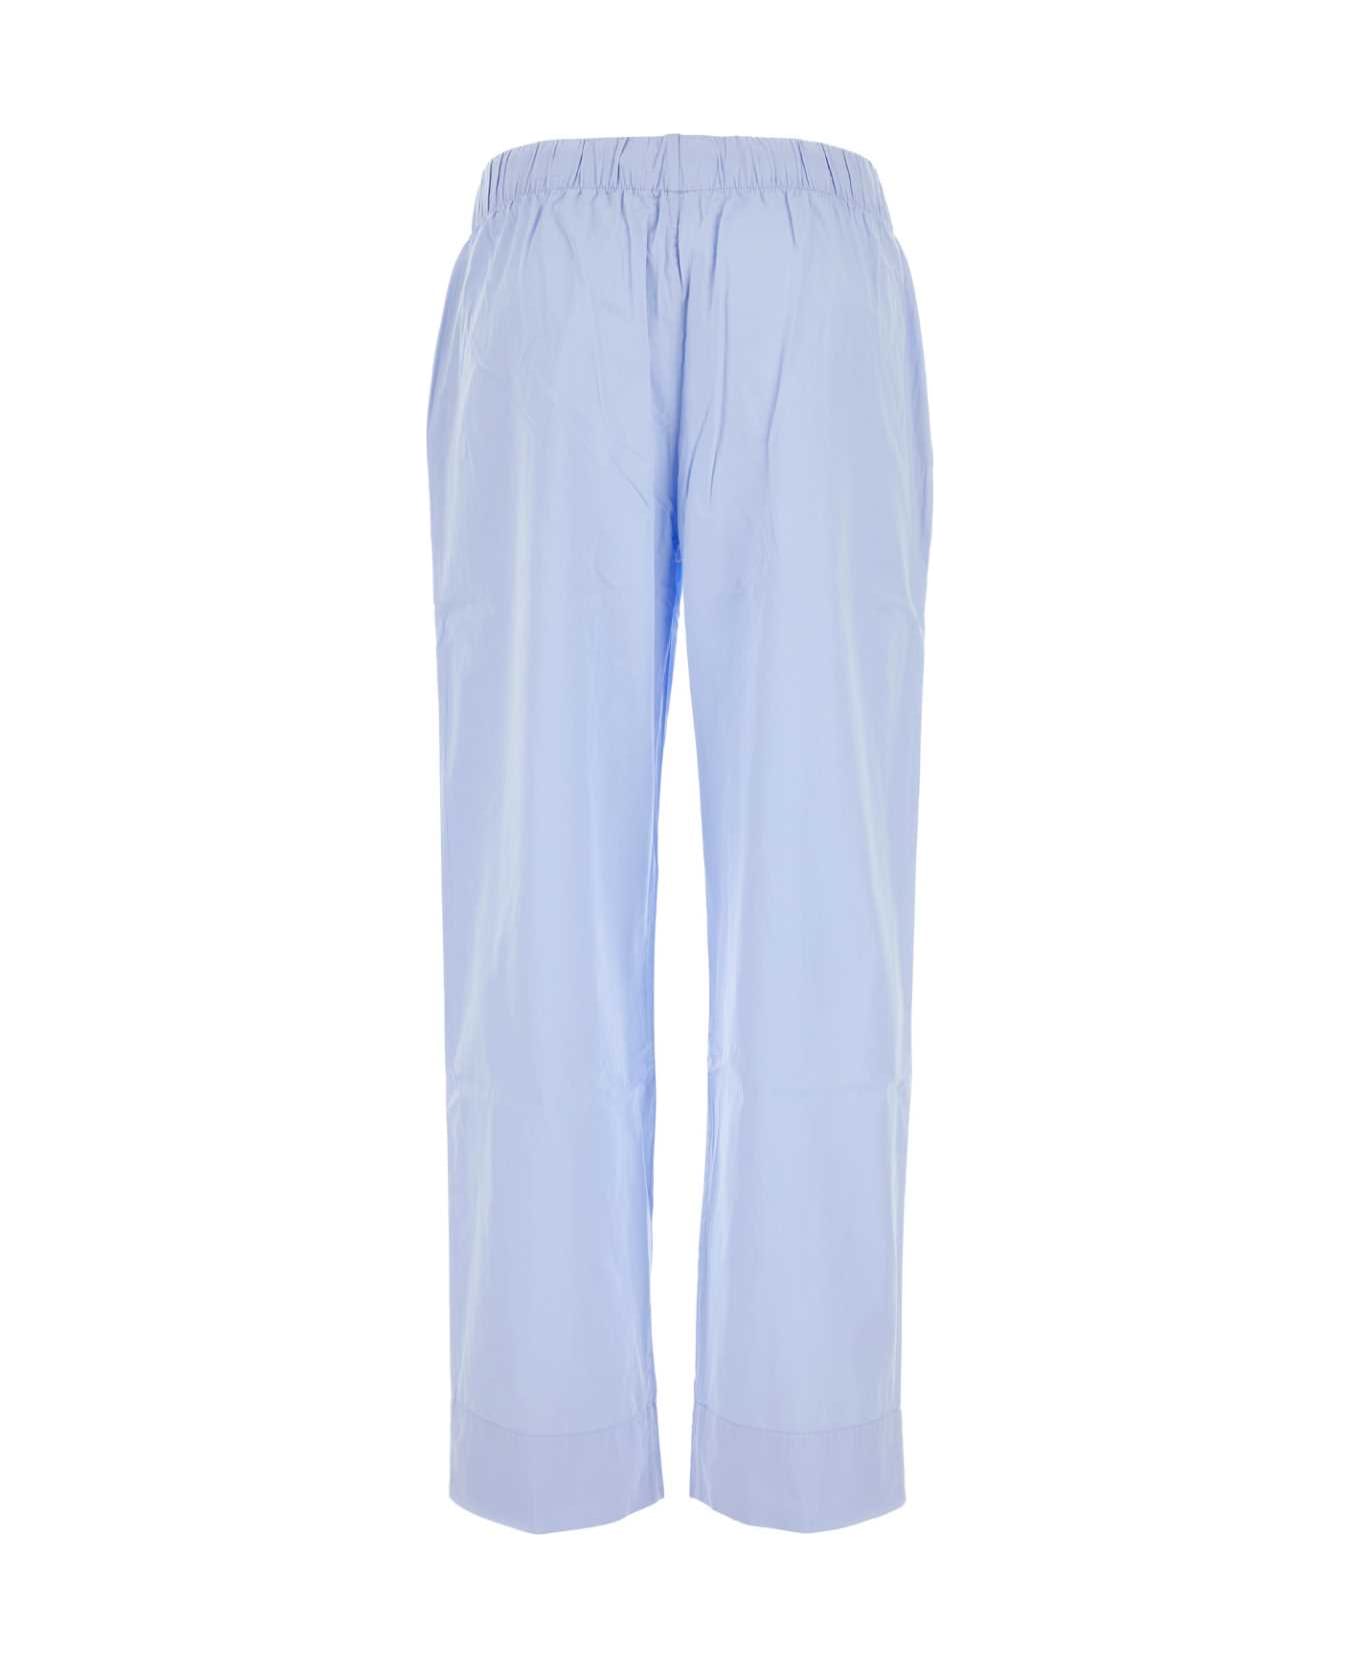 Tekla Light Blue Cotton Pyjama Pant - SHIRTBLUE